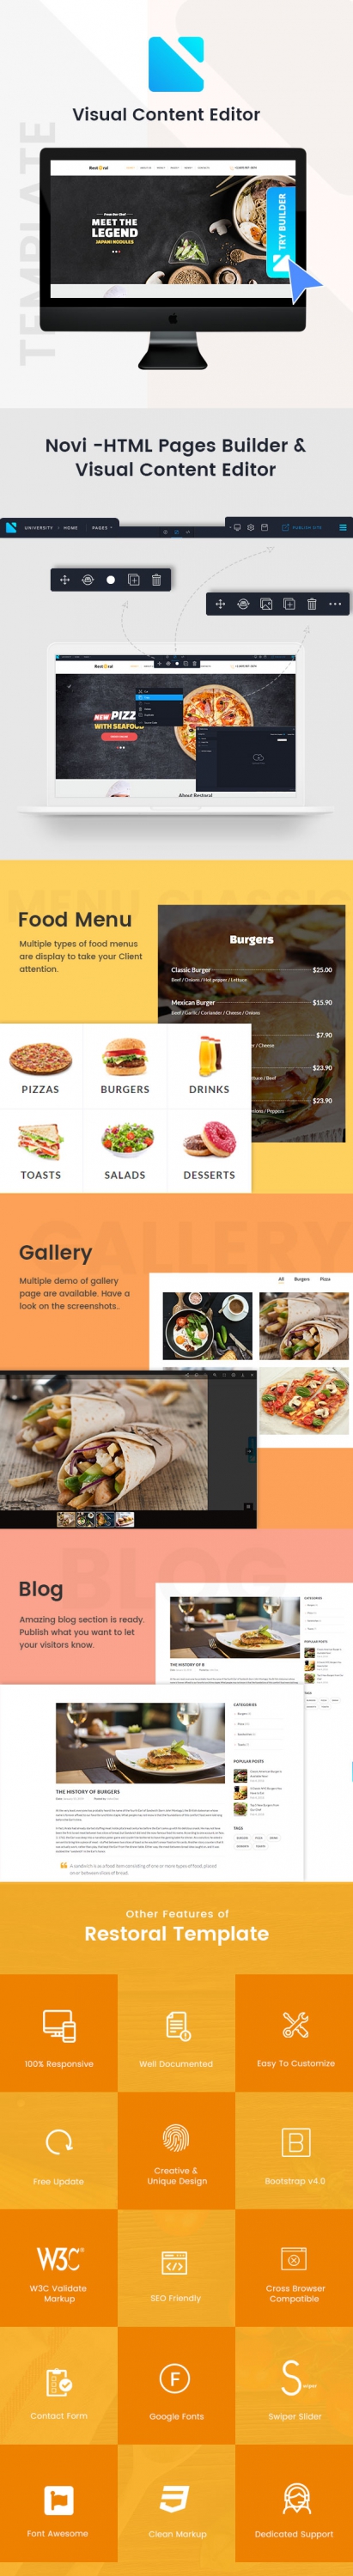 Restoral - Food & Restaurant HTML Responsive Bootstrap 4 Template - 2